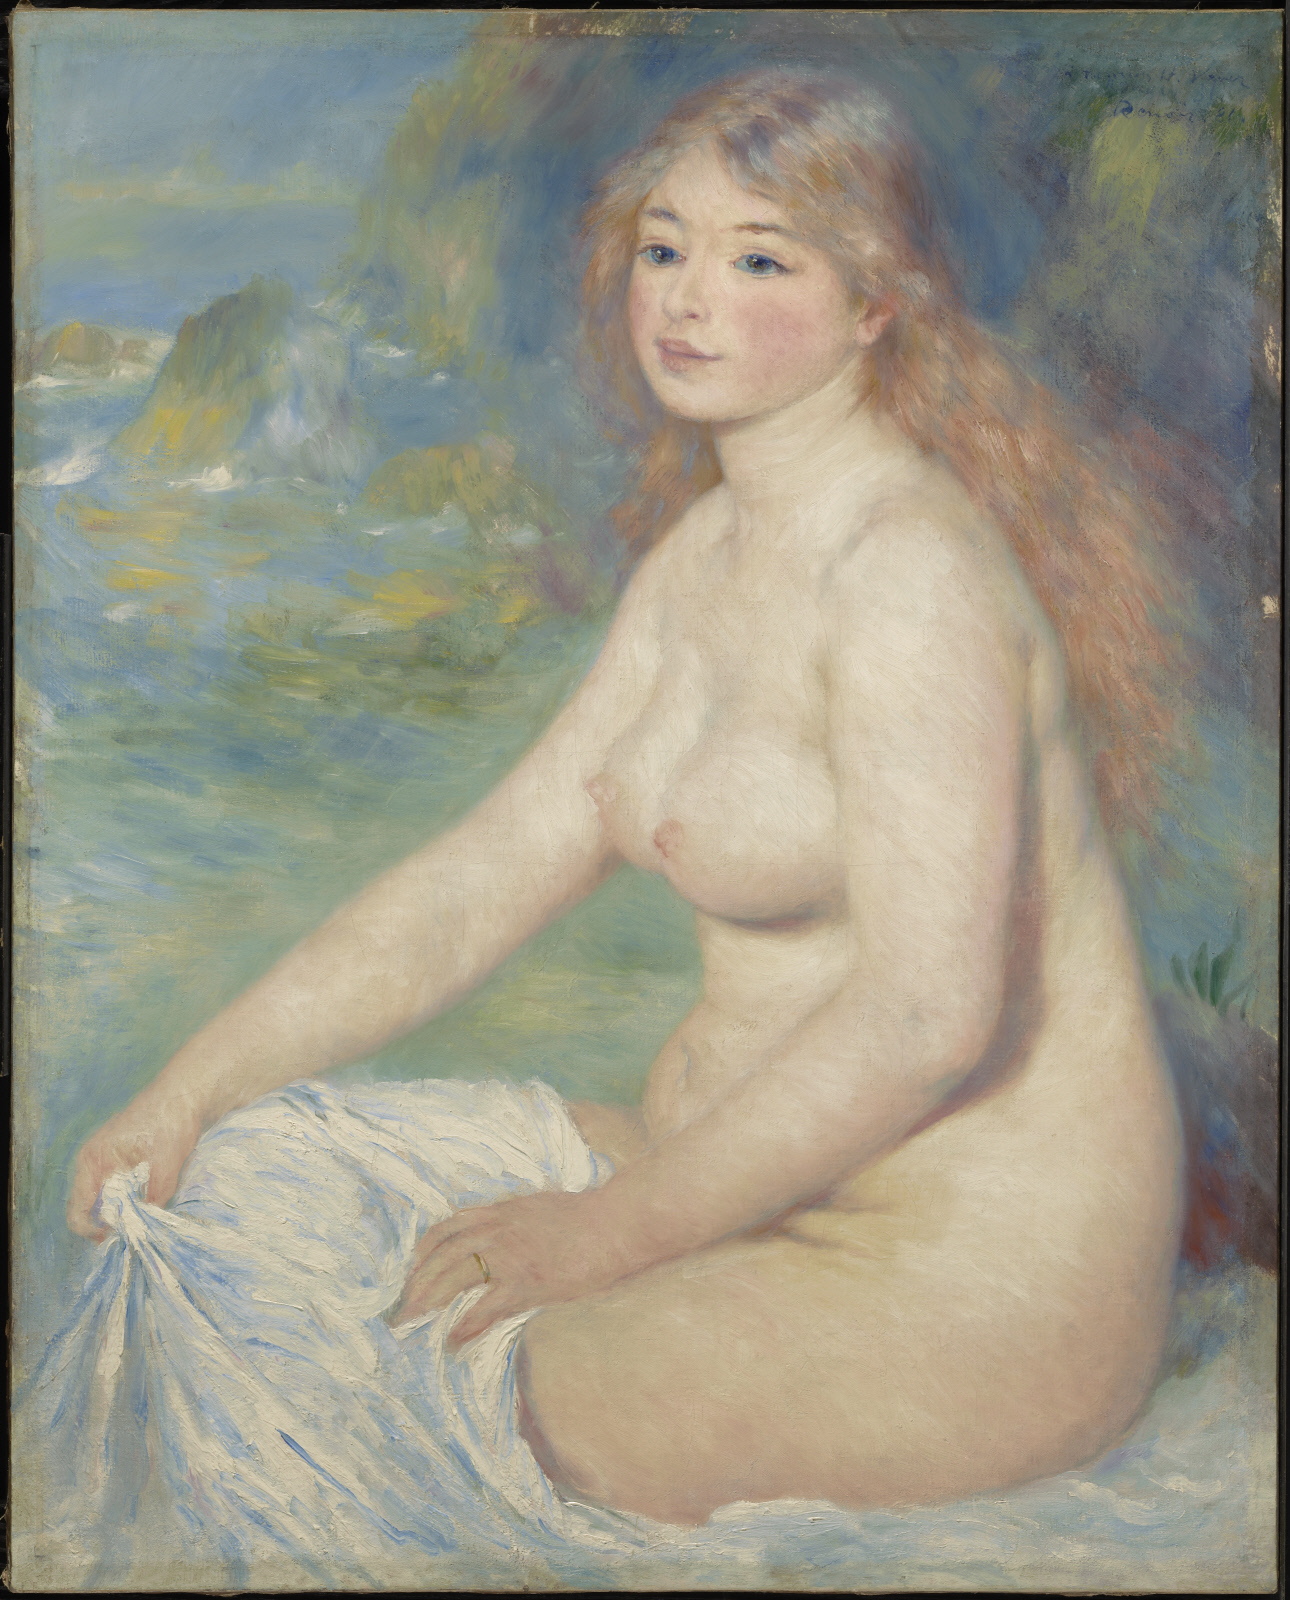 La bañista rubia by Pierre-Auguste Renoir - 1881 - 81.6 x 65.4 cm The Clark